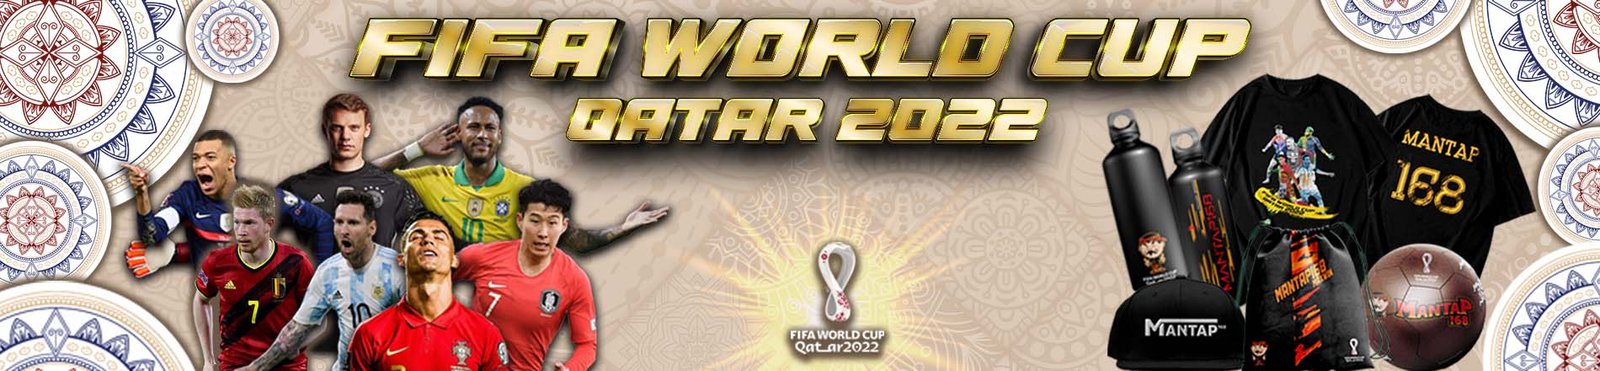 Fifa World Cup Qatar